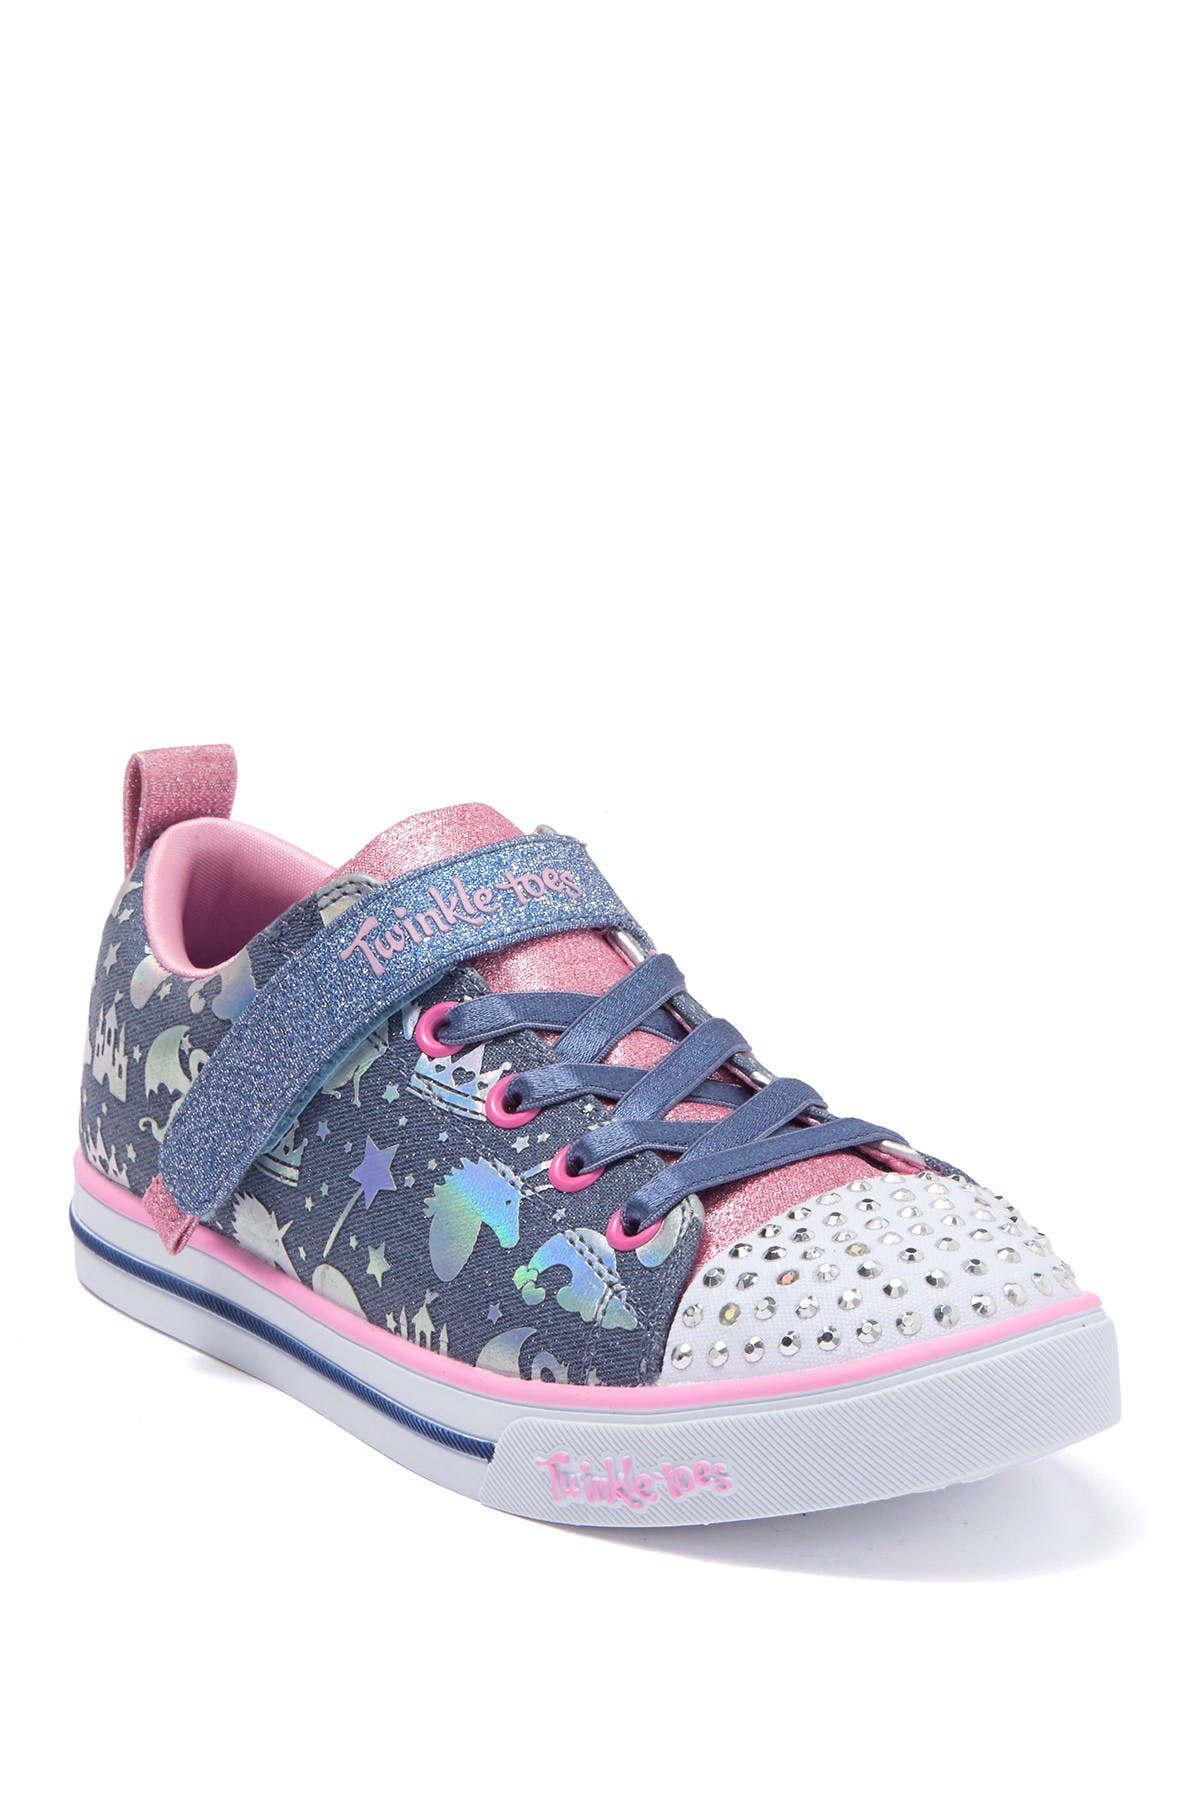 Skechers Kids' Girls' Shoes | Nordstrom 